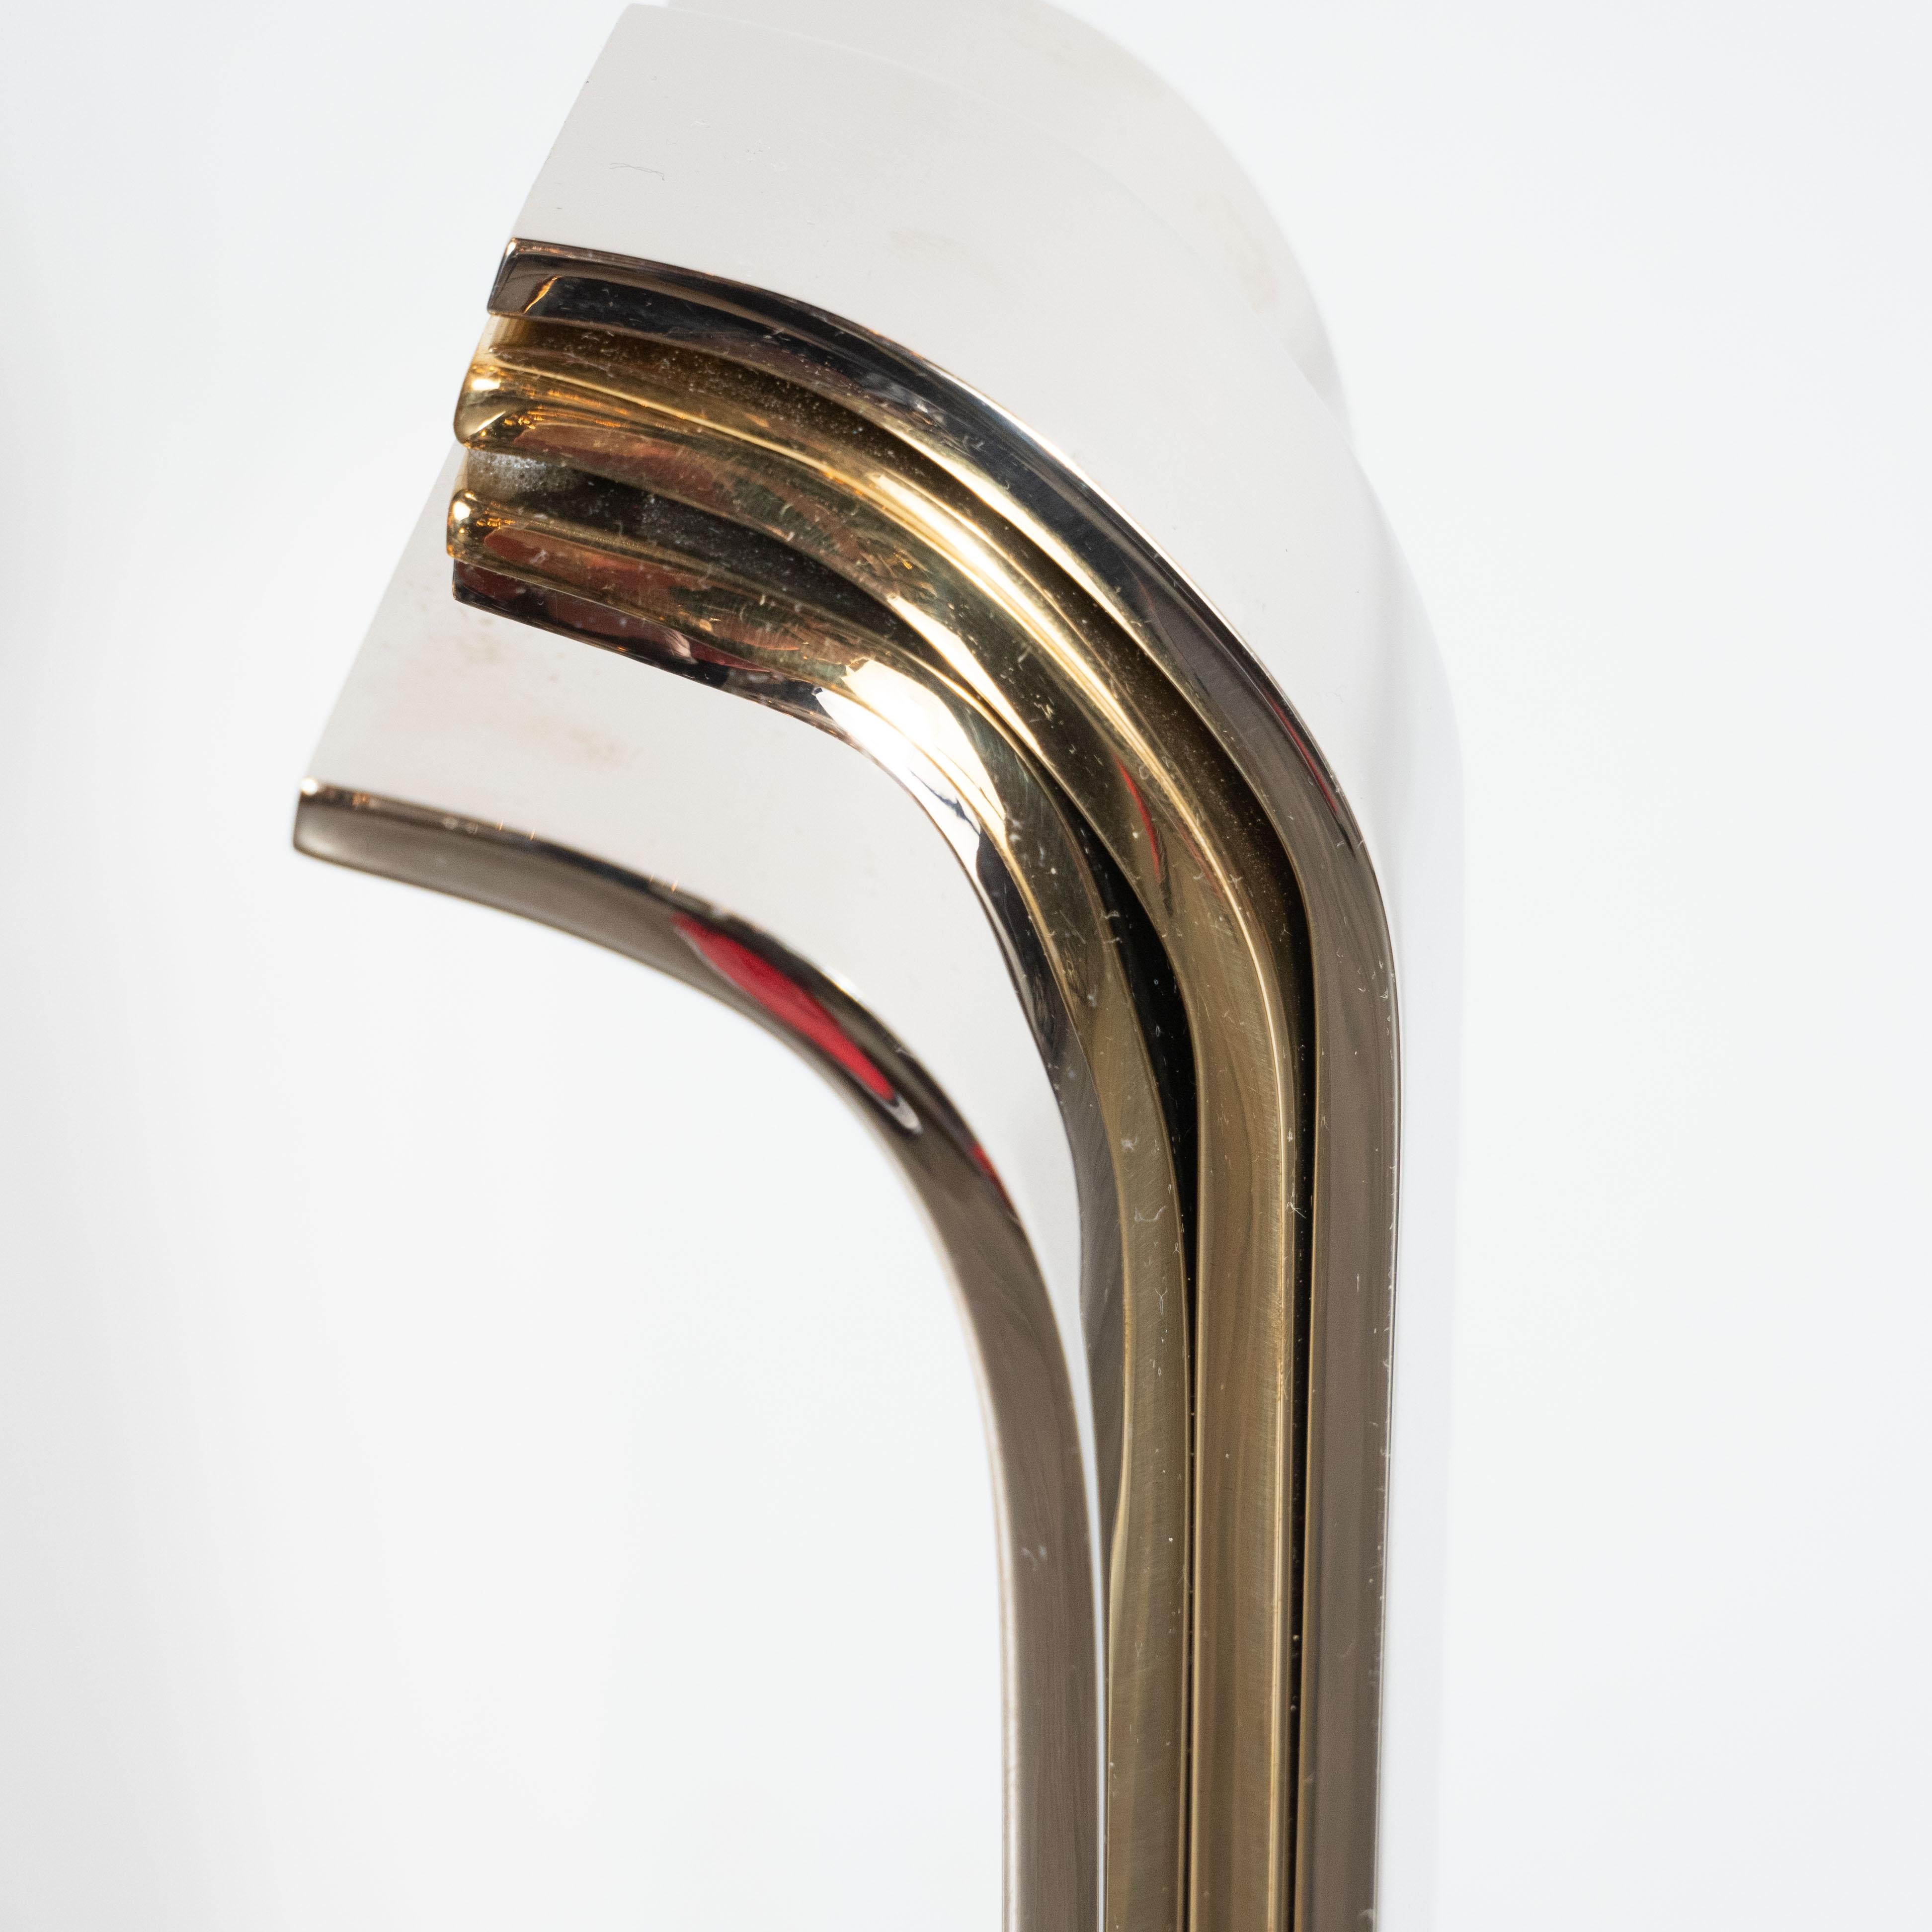 Modernist Art Deco Inspired Nickel and Brass Andirons, Manner of Karl Springer For Sale 1